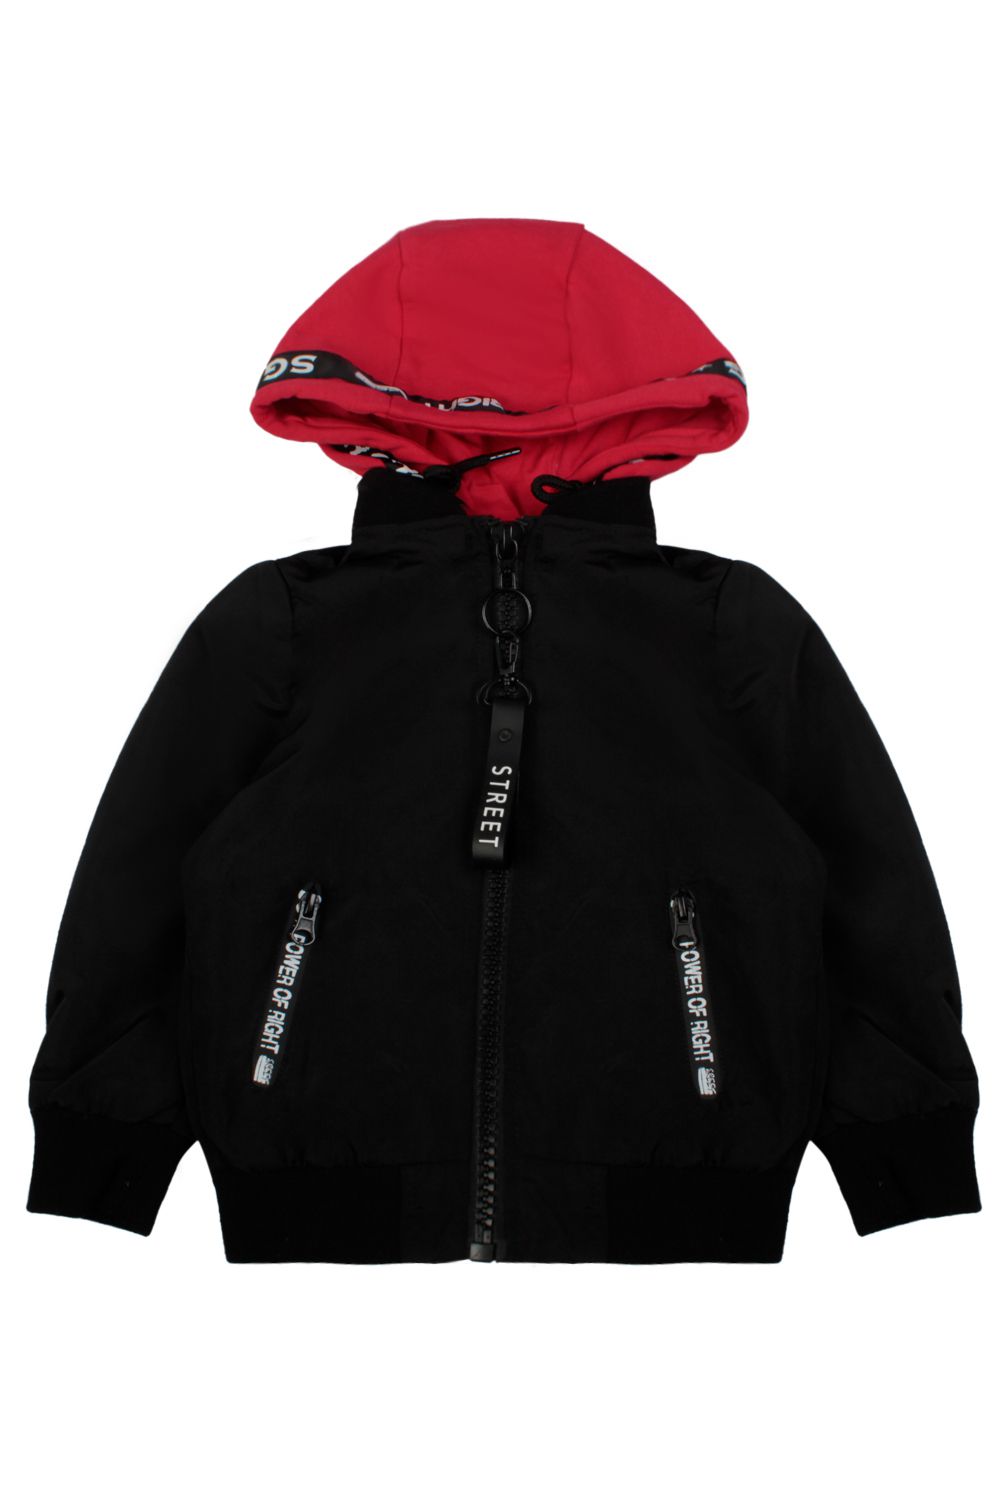 Куртка Street Gang, размер 116, цвет черный SG7352 - фото 1